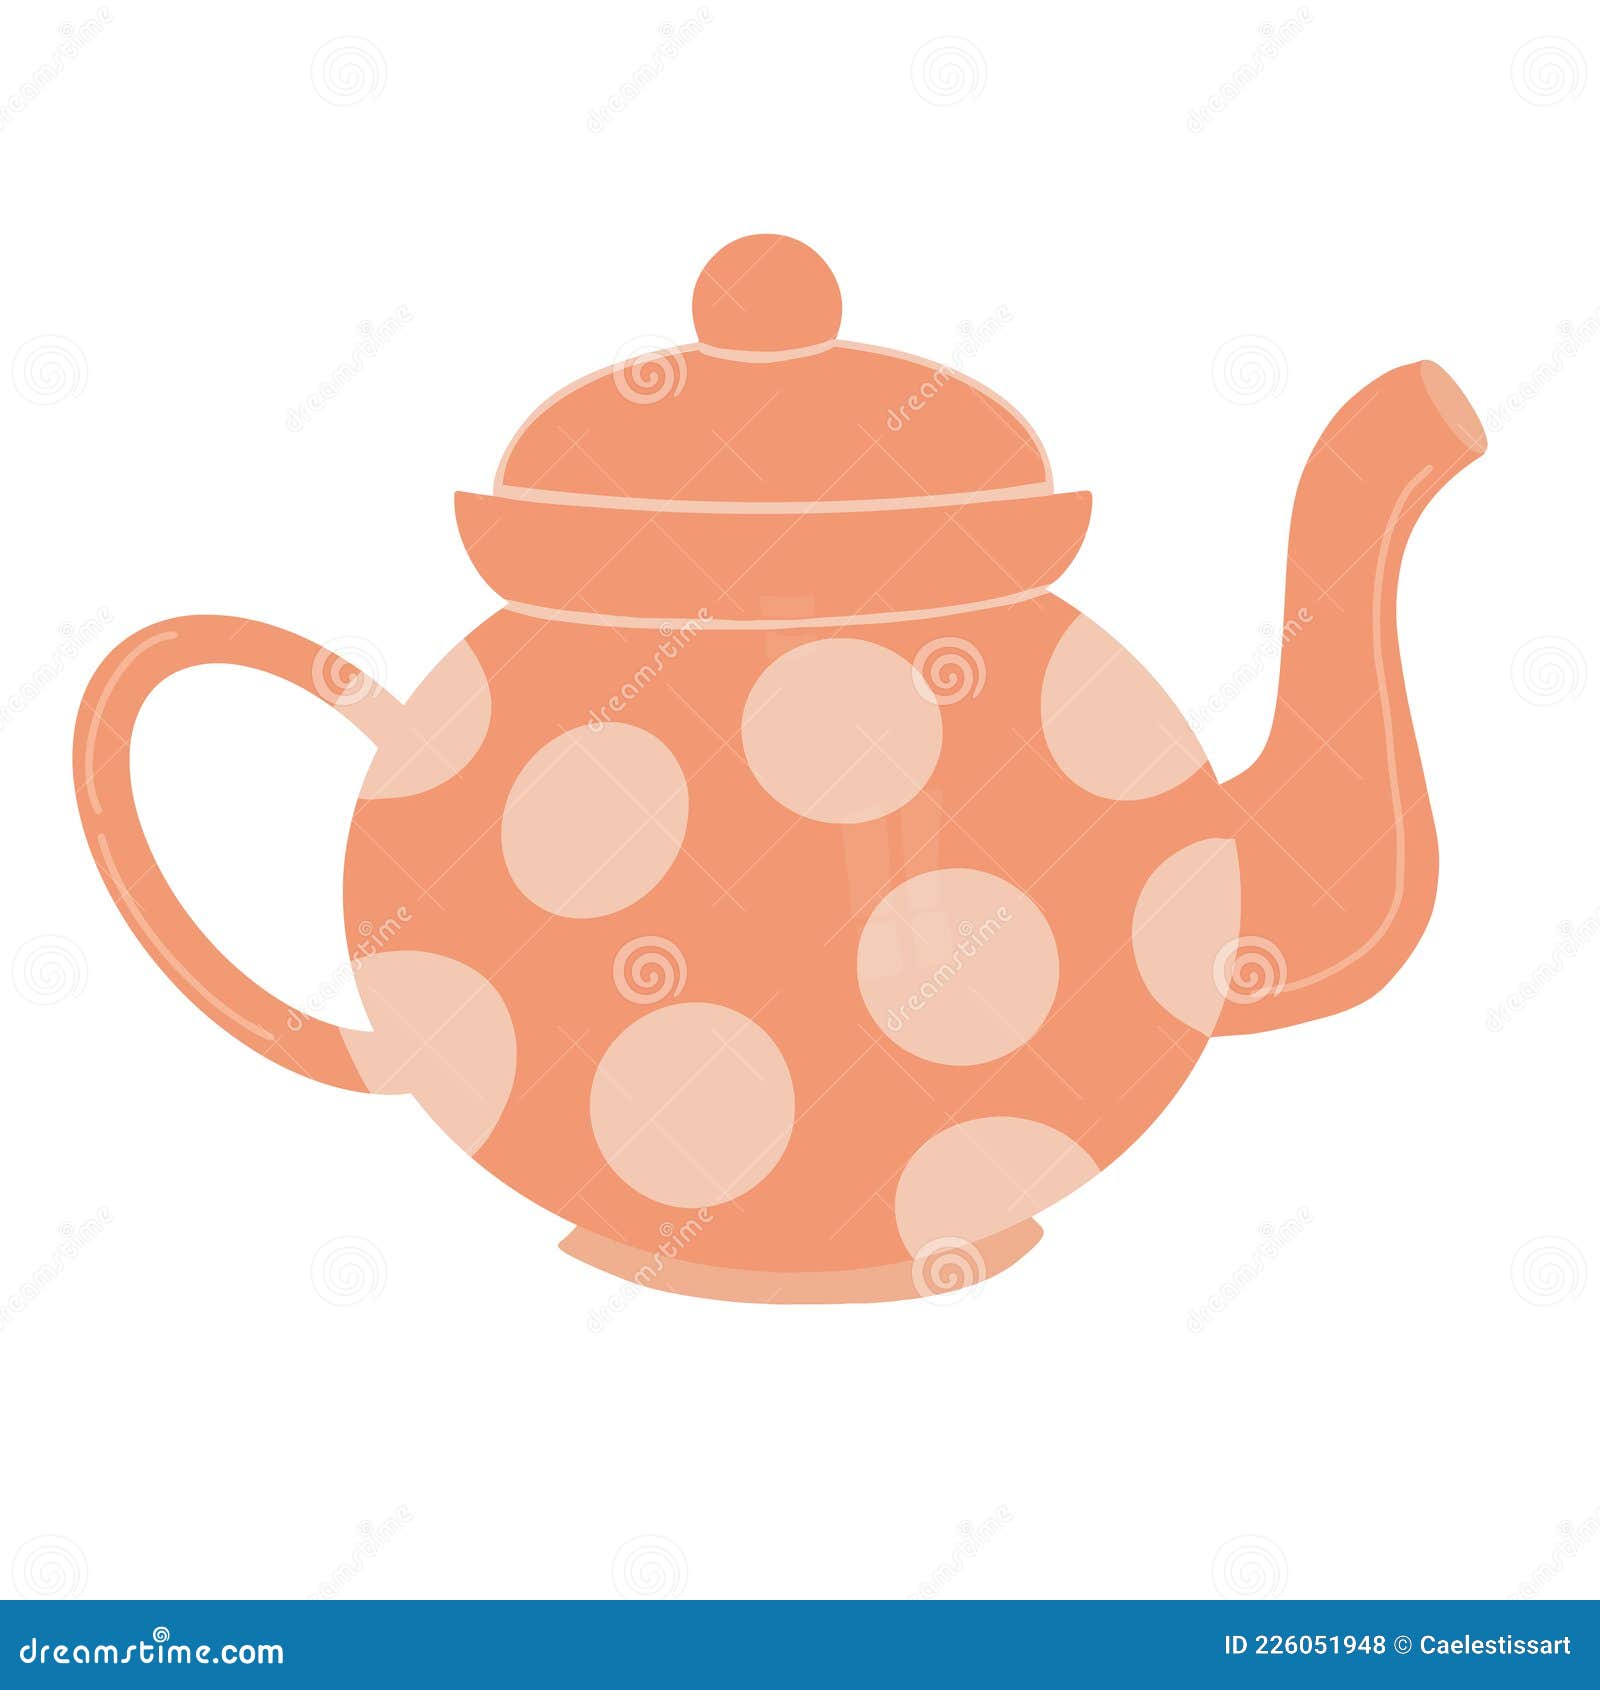 https://thumbs.dreamstime.com/z/tea-pot-vector-illustration-isolated-white-background-cute-hand-drawn-ceramic-peach-color-teapot-kettle-brewing-tea-tea-pot-226051948.jpg